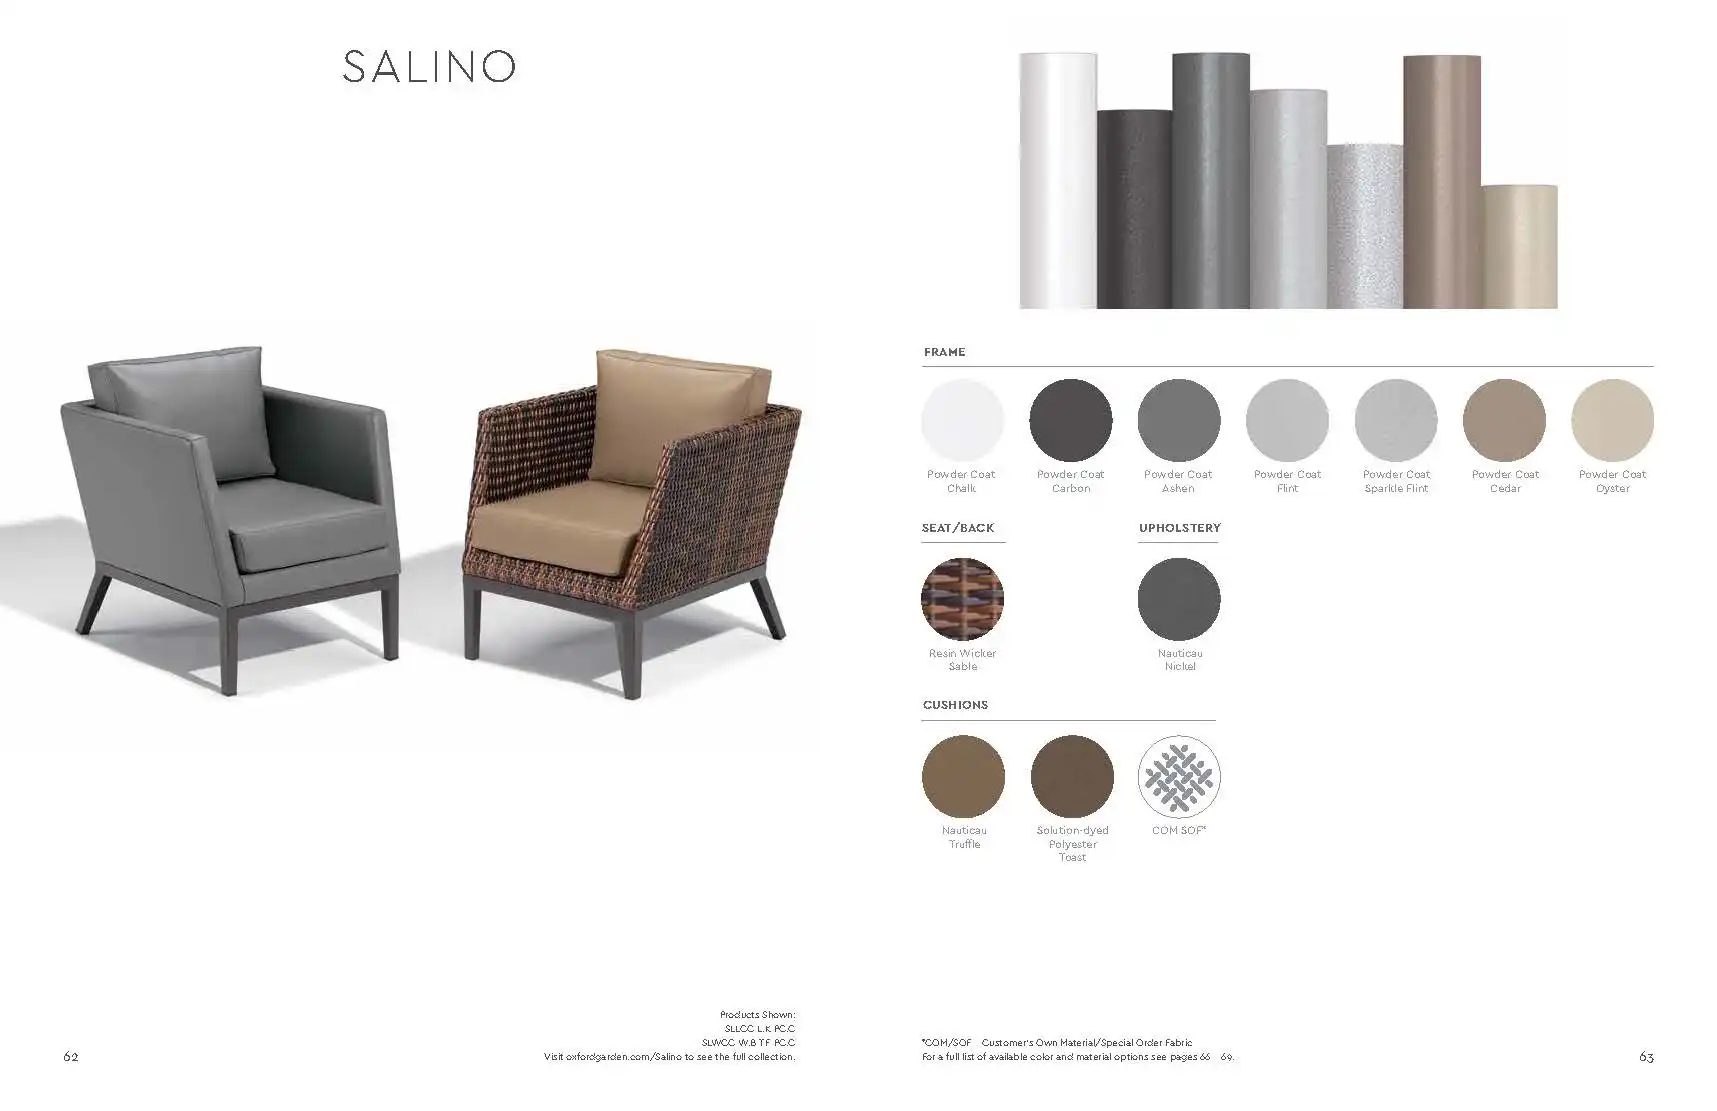 SALINO (5) Lounge Chairs by Oxford Garden